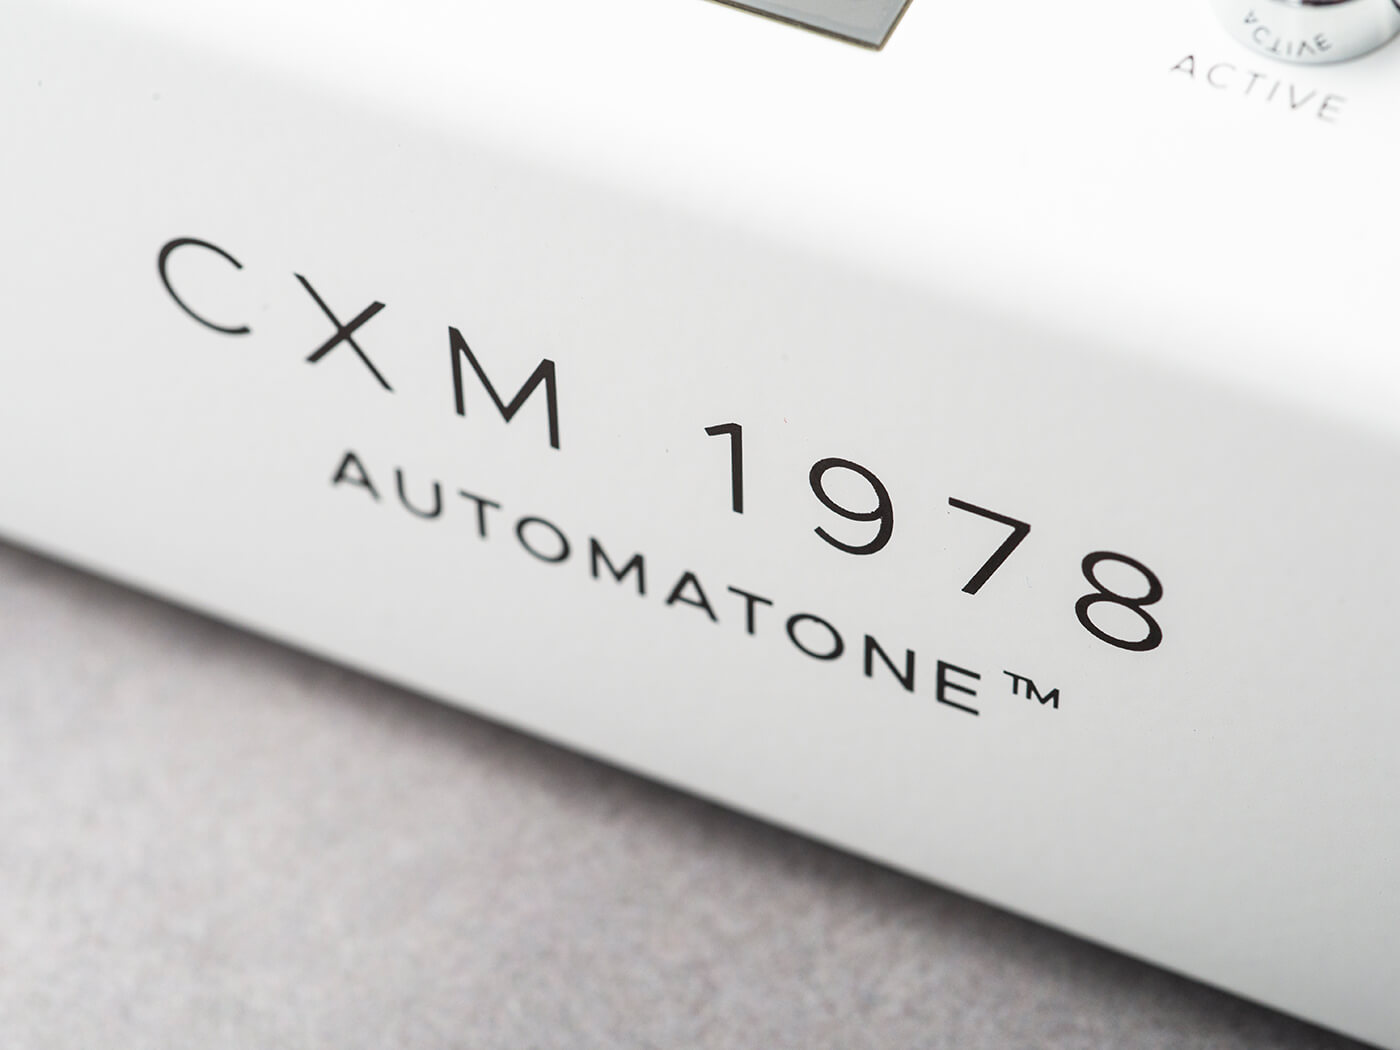 Chase Bliss Audio Automatone CXM 1978